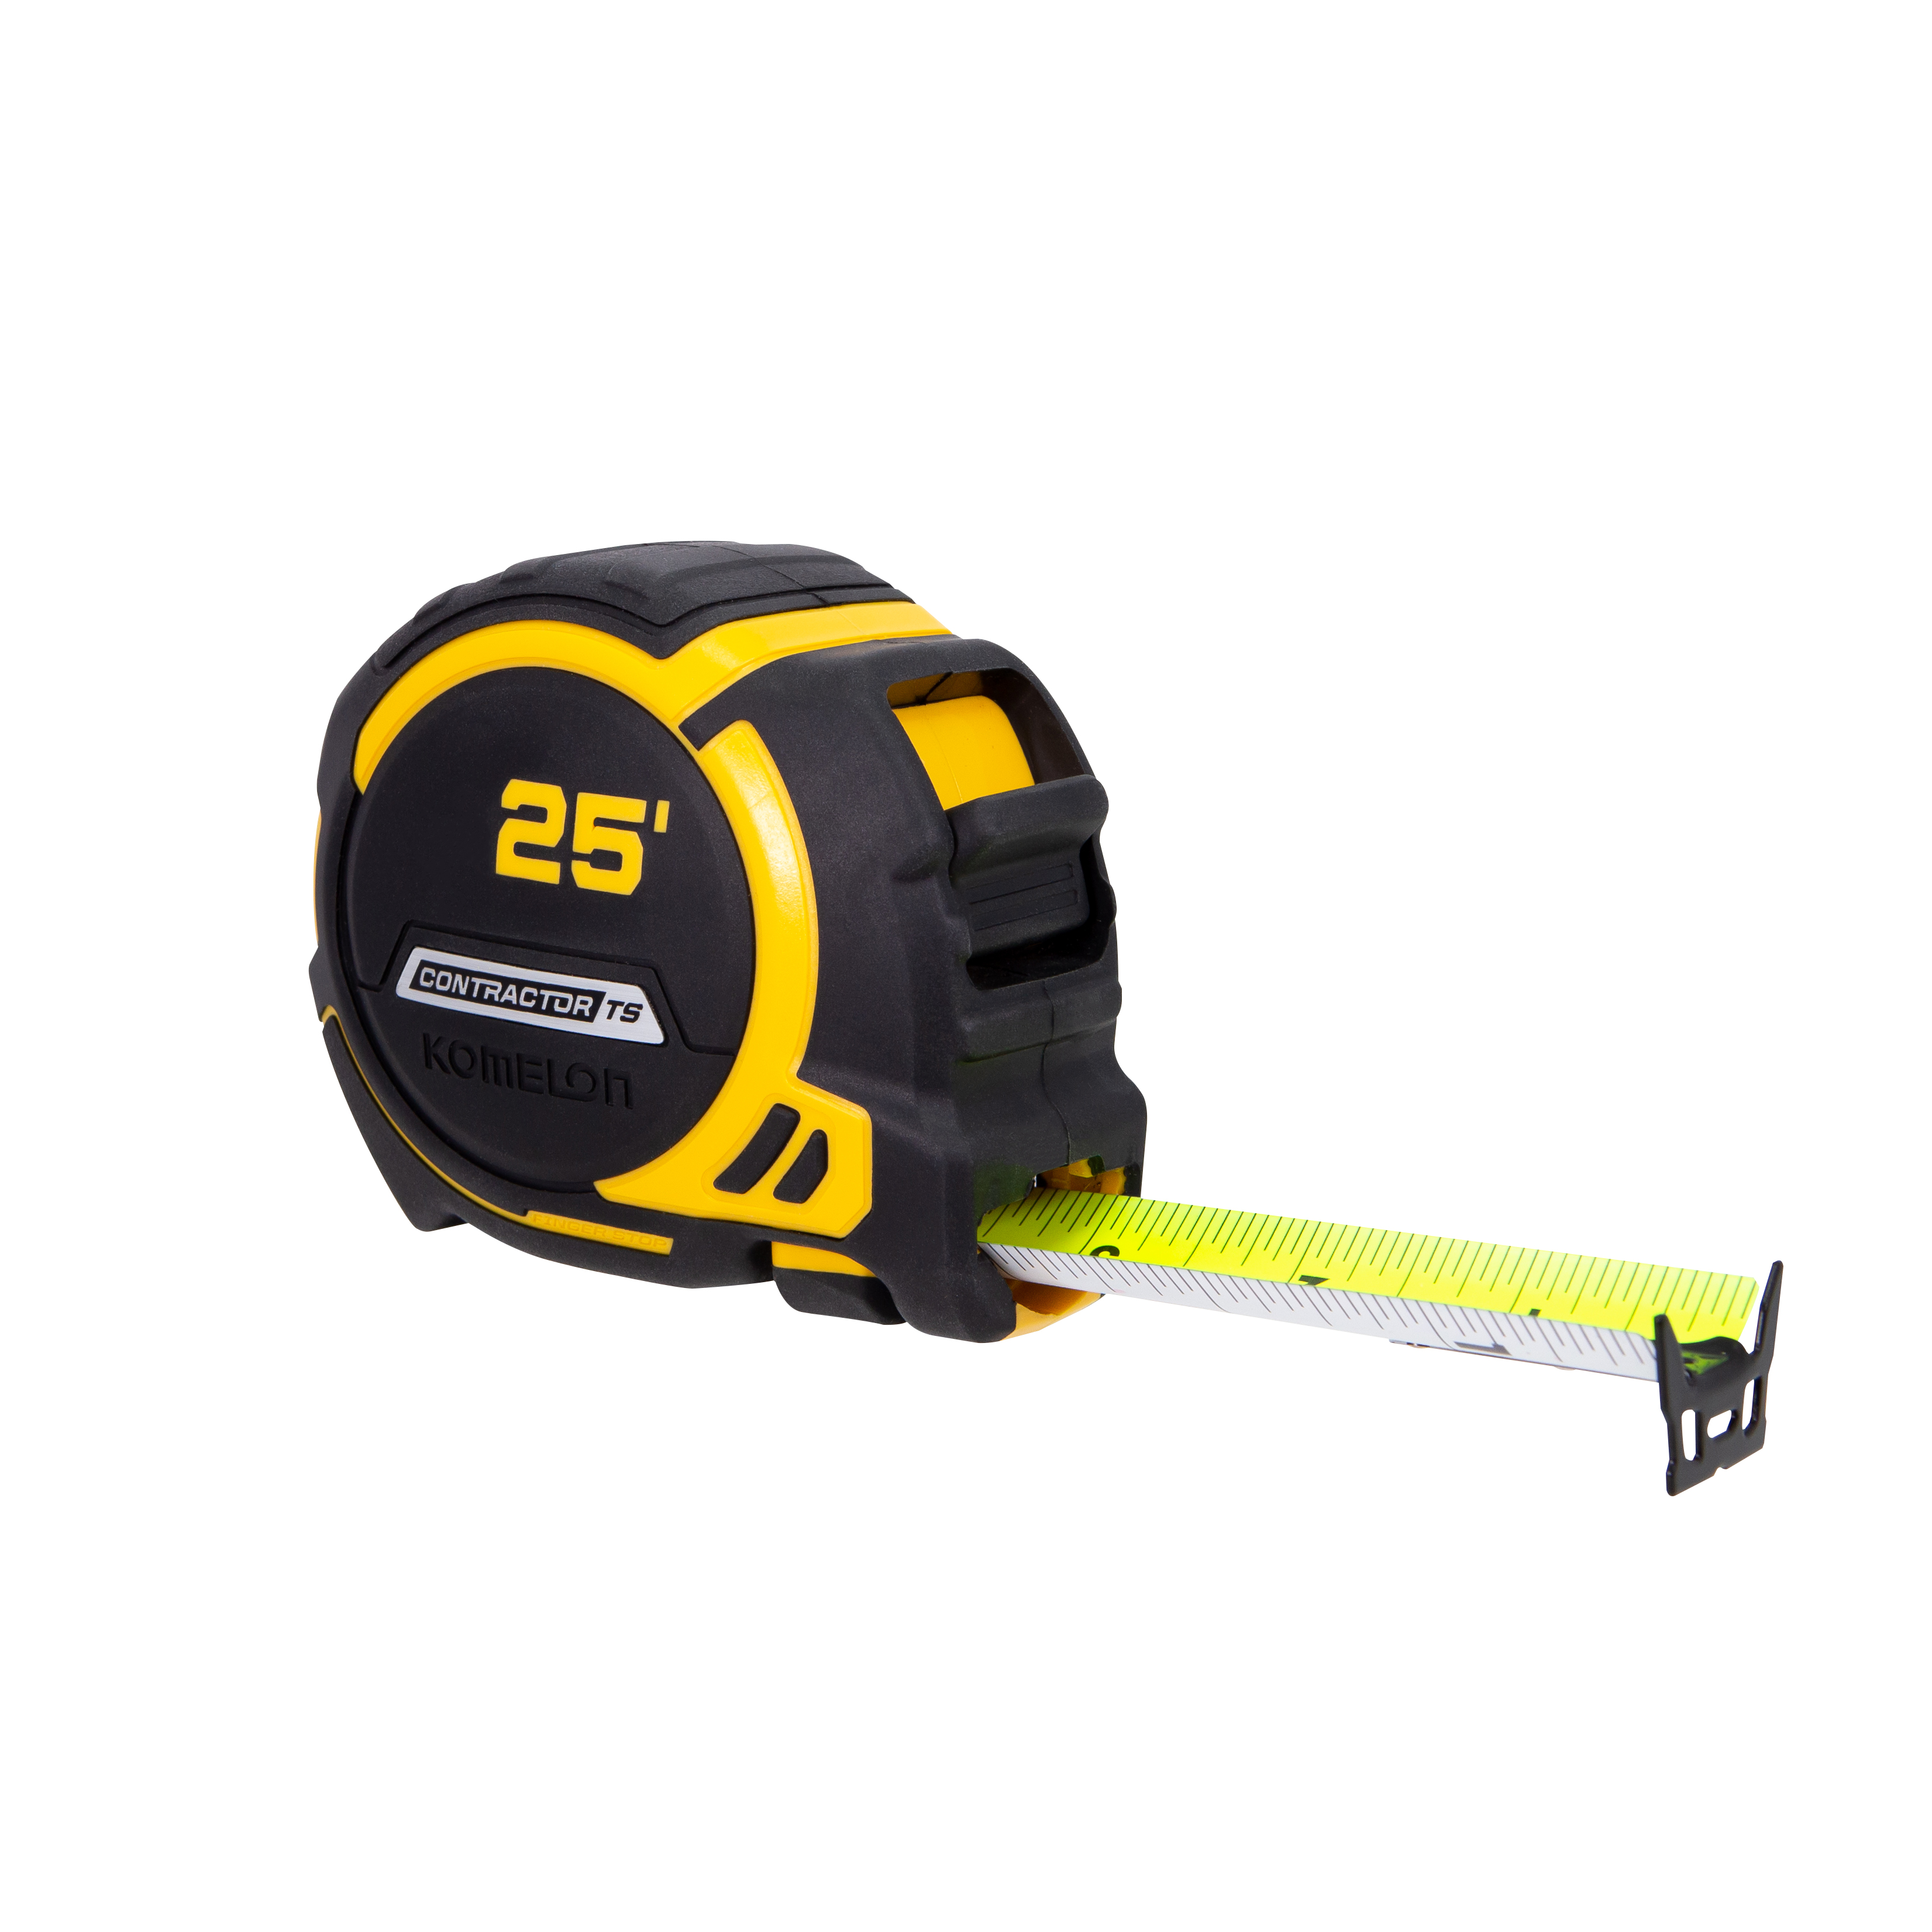 Komelon Fiber Reel measuring tape - 200 feet - tools - by owner